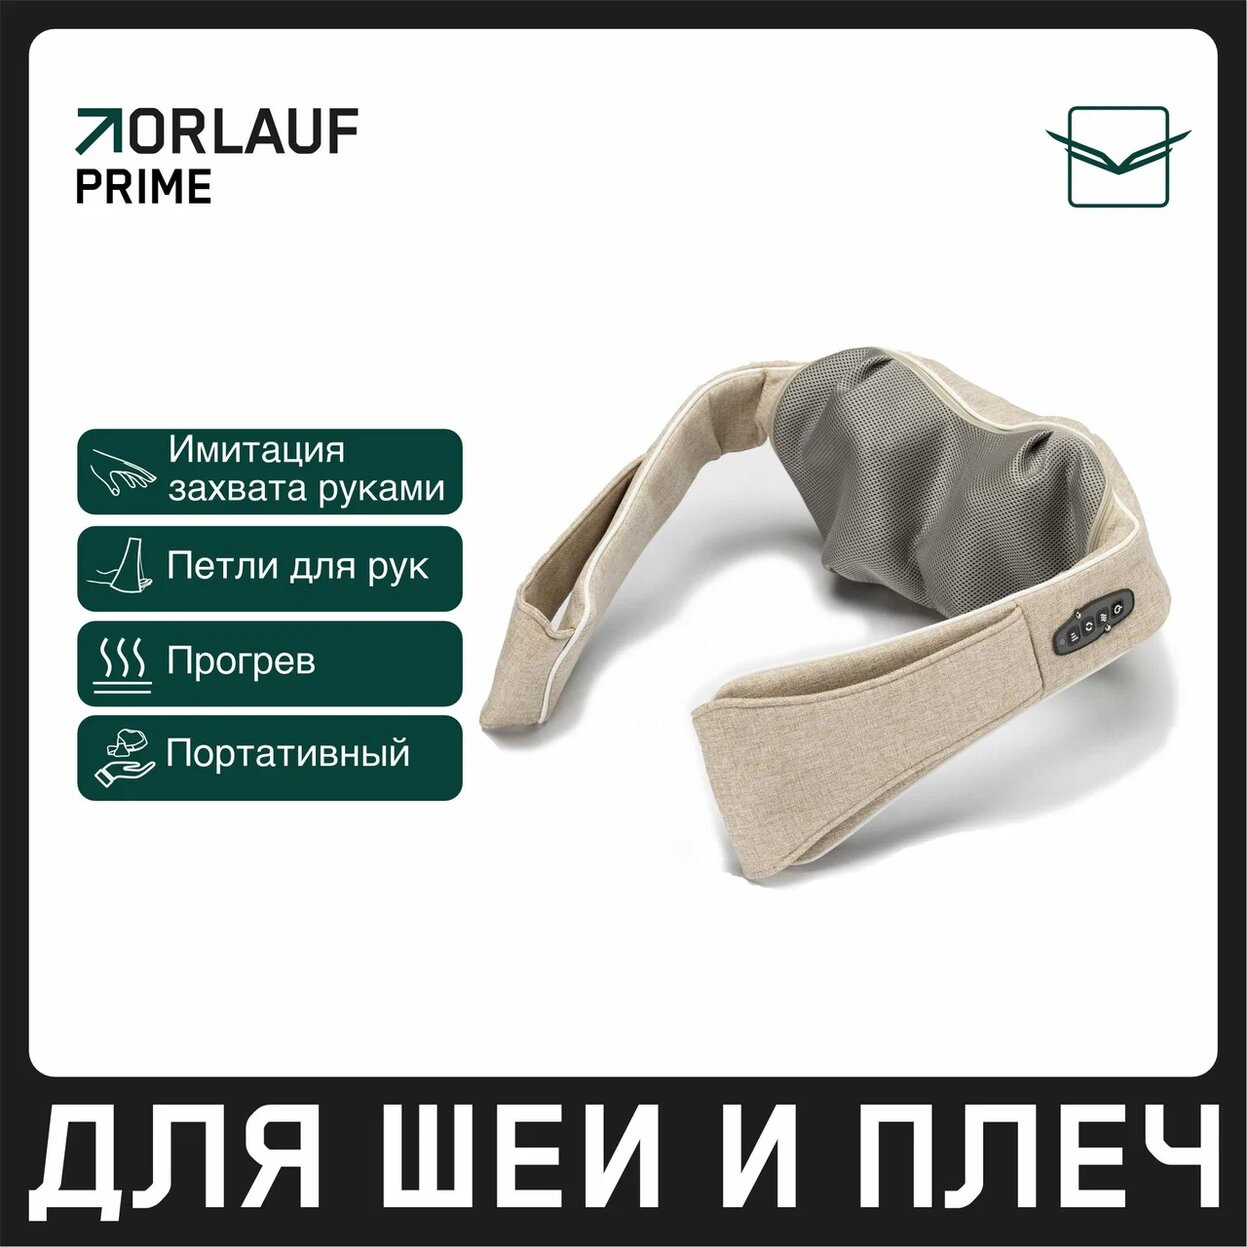 Orlauf Prime из каталога устройств для массажа в Сочи по цене 11900 ₽